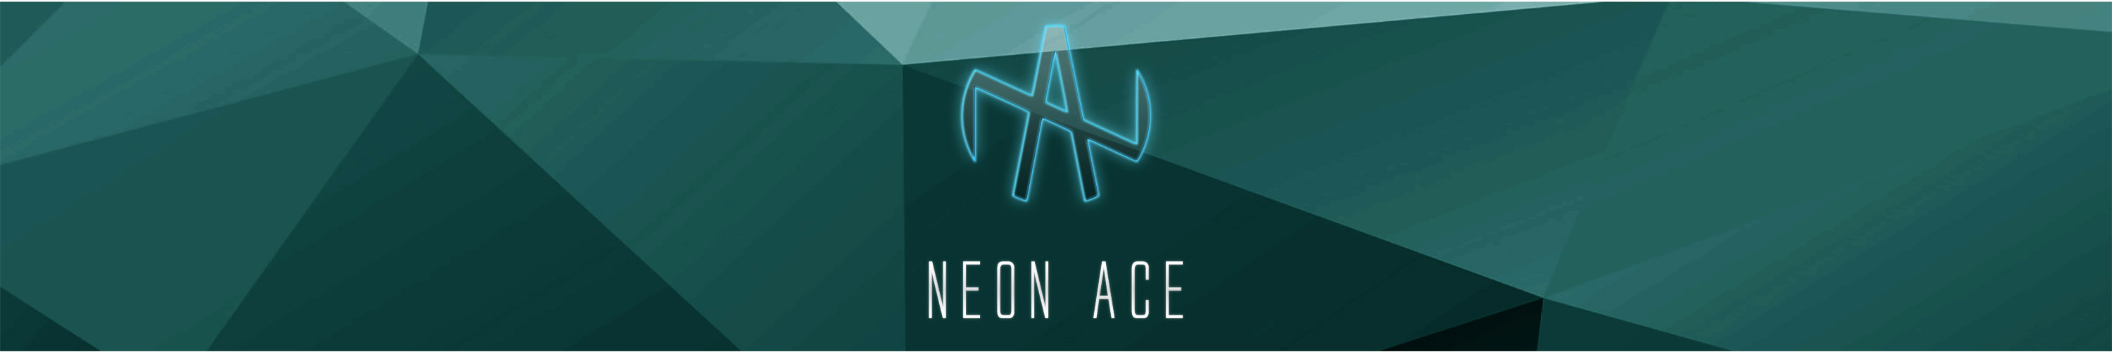 Neon Ace